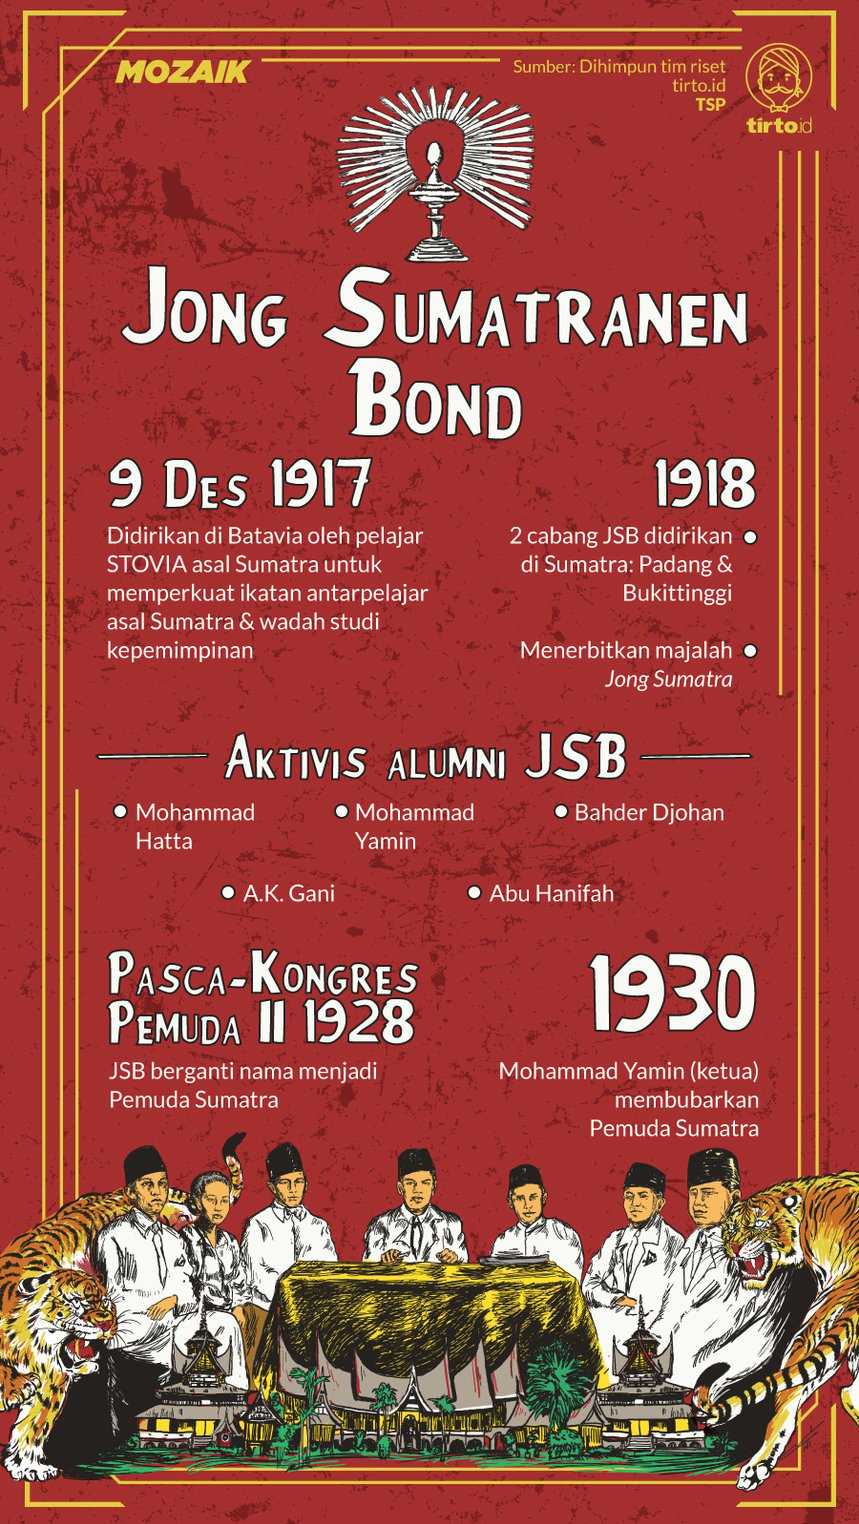 Infografik Mozaik Jong Sumatranen Bond